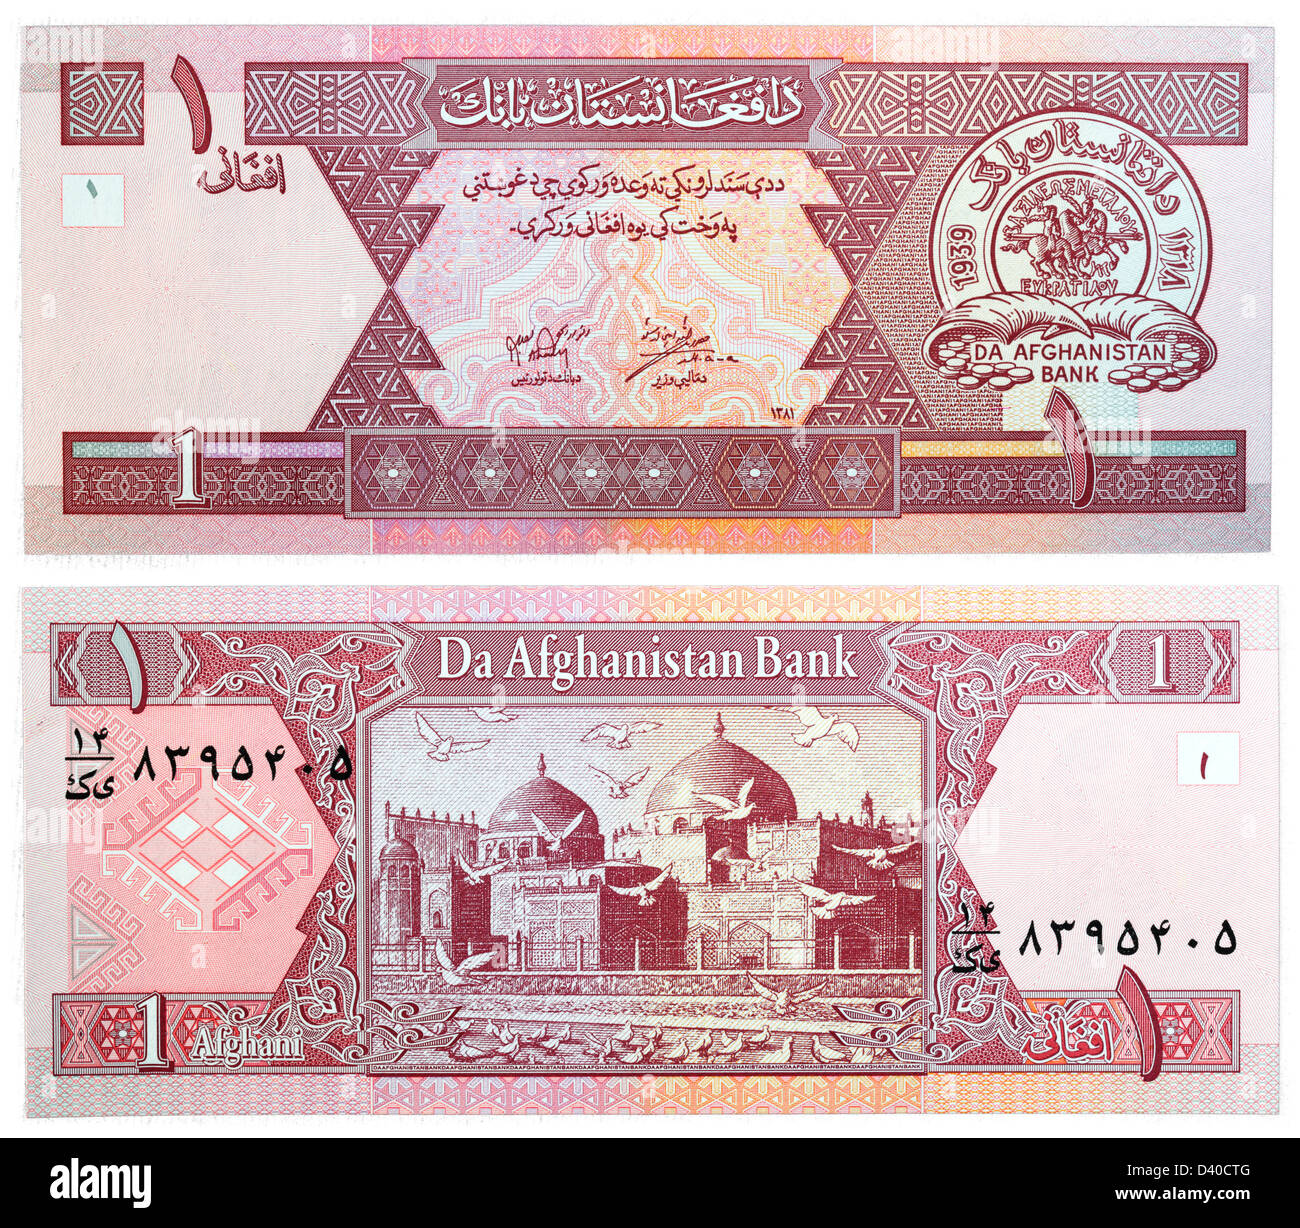 1 Afghani banknote, Shrine of Hazrat Ali (Blue Mosque in Mazar-e-Sharif), Afghanistan, 2002 Stock Photo